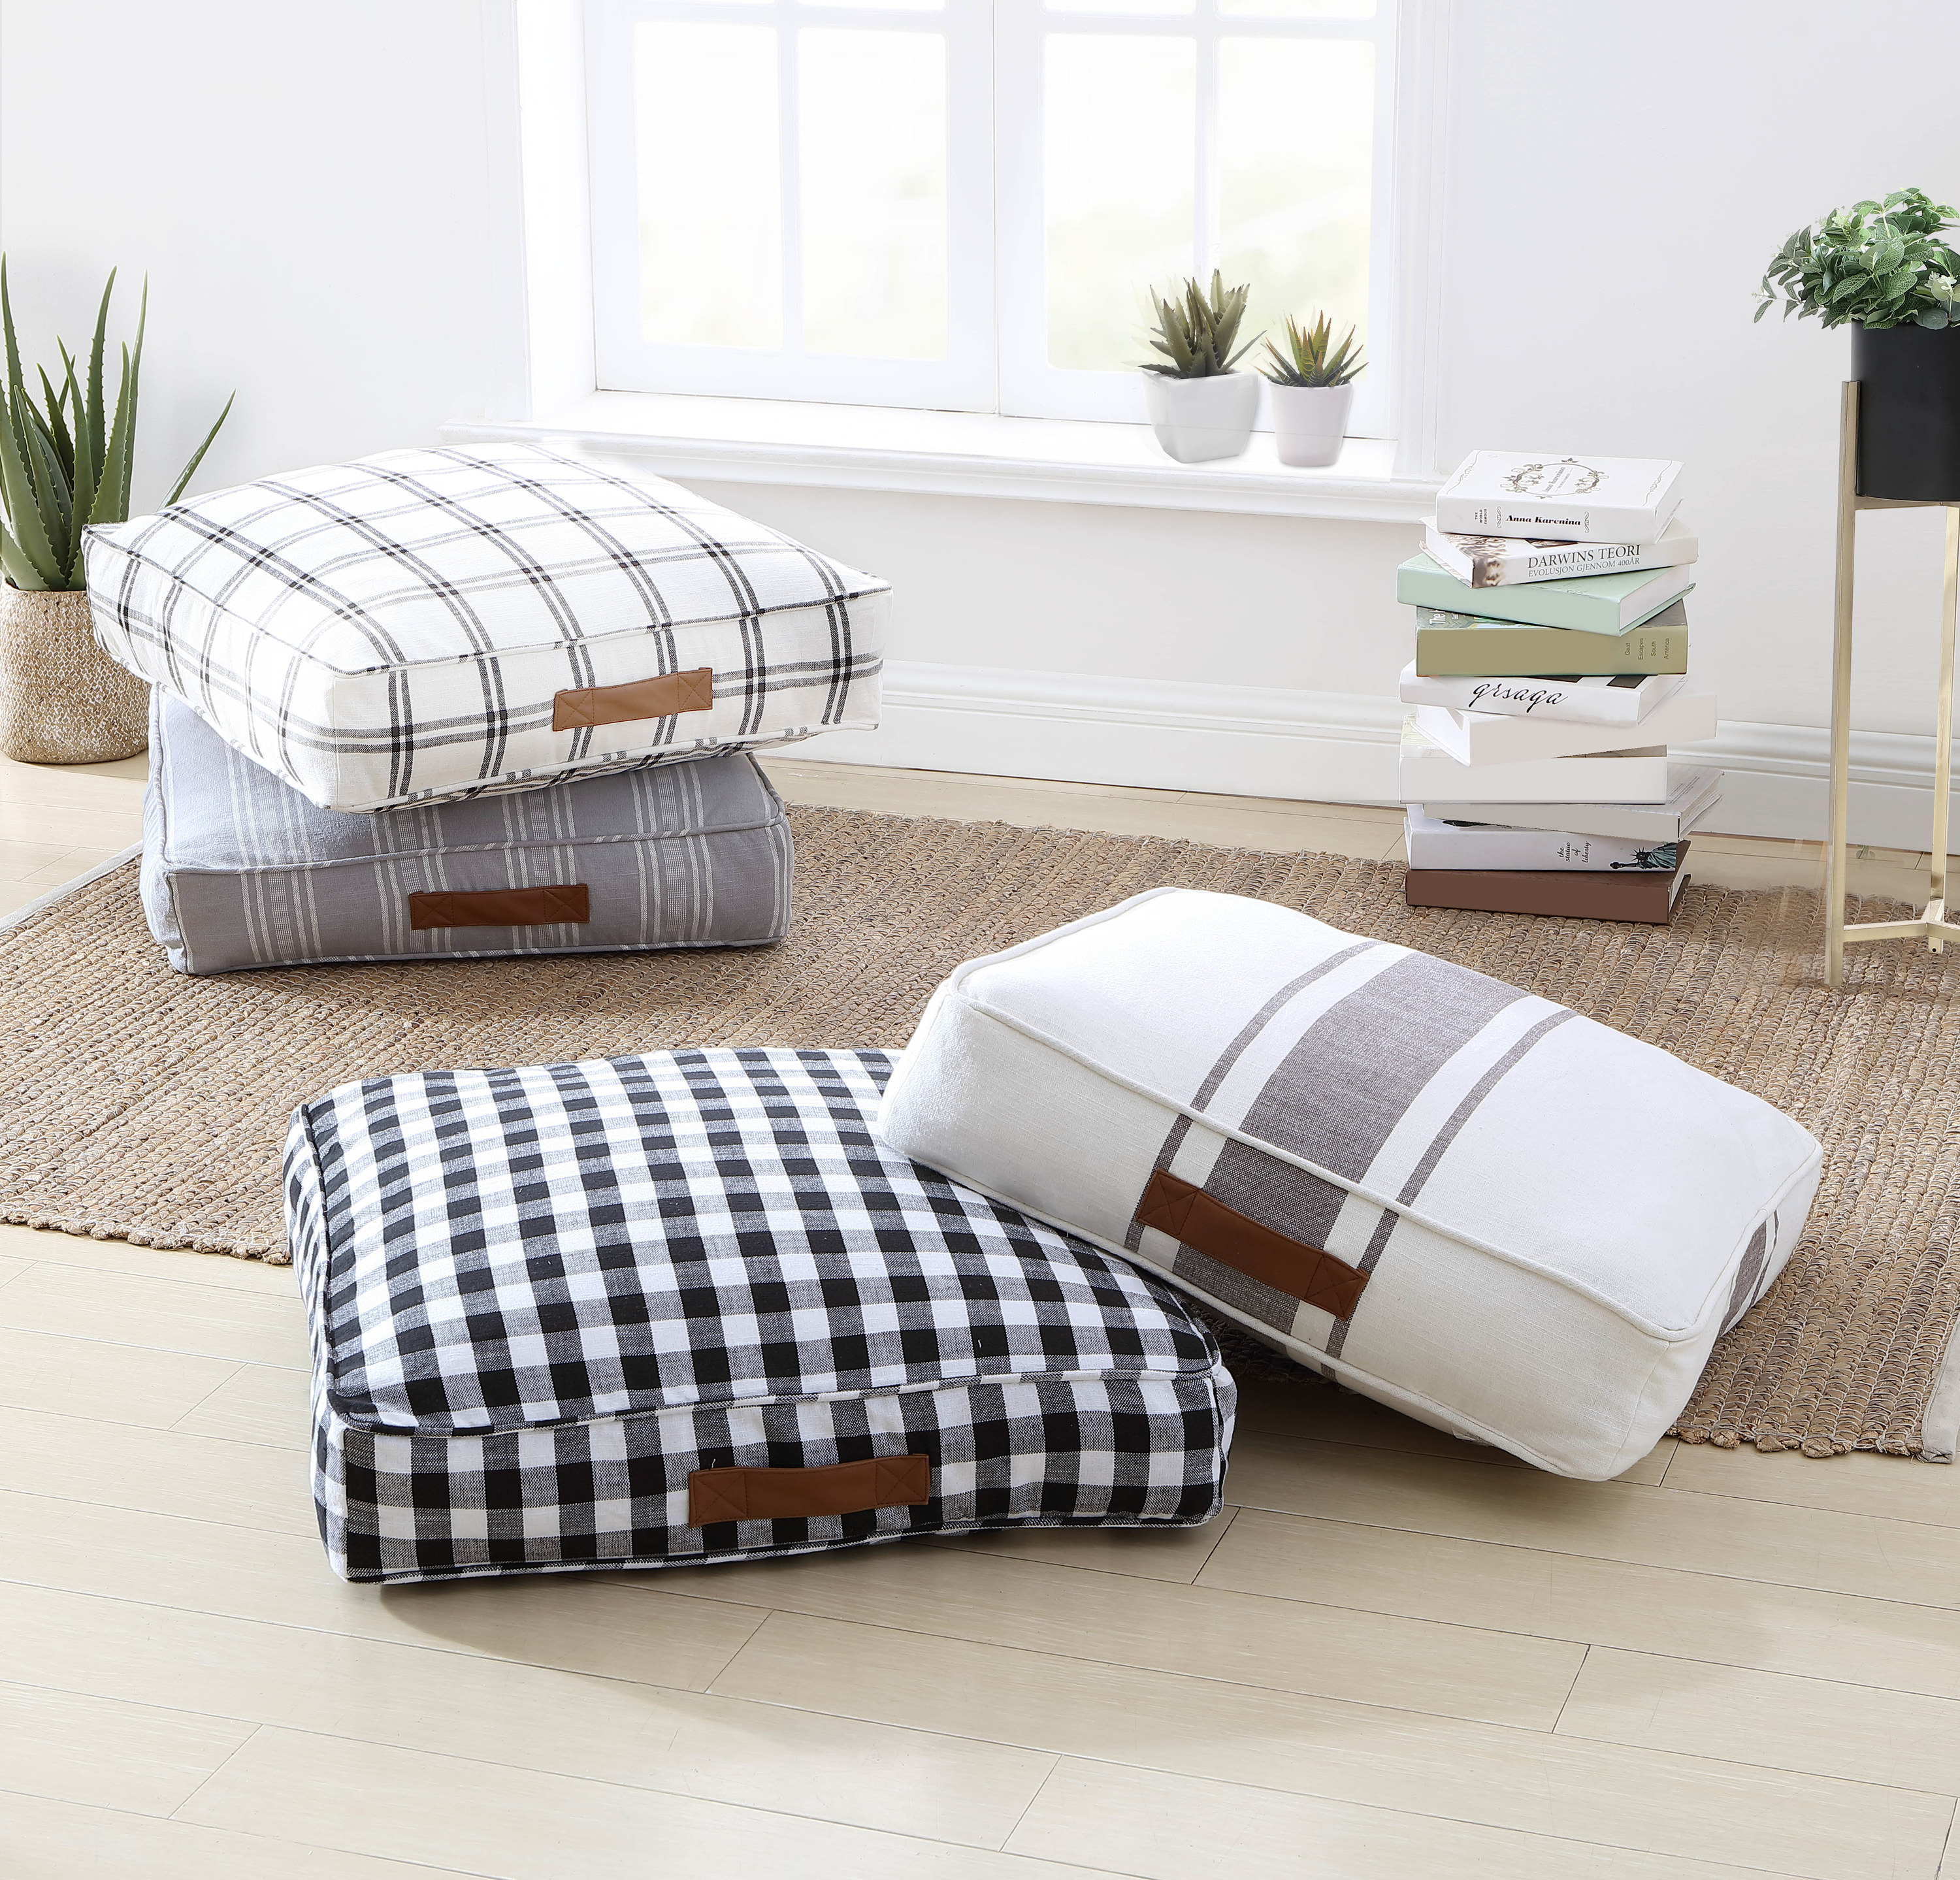 rectangular floor pillows in different patterns